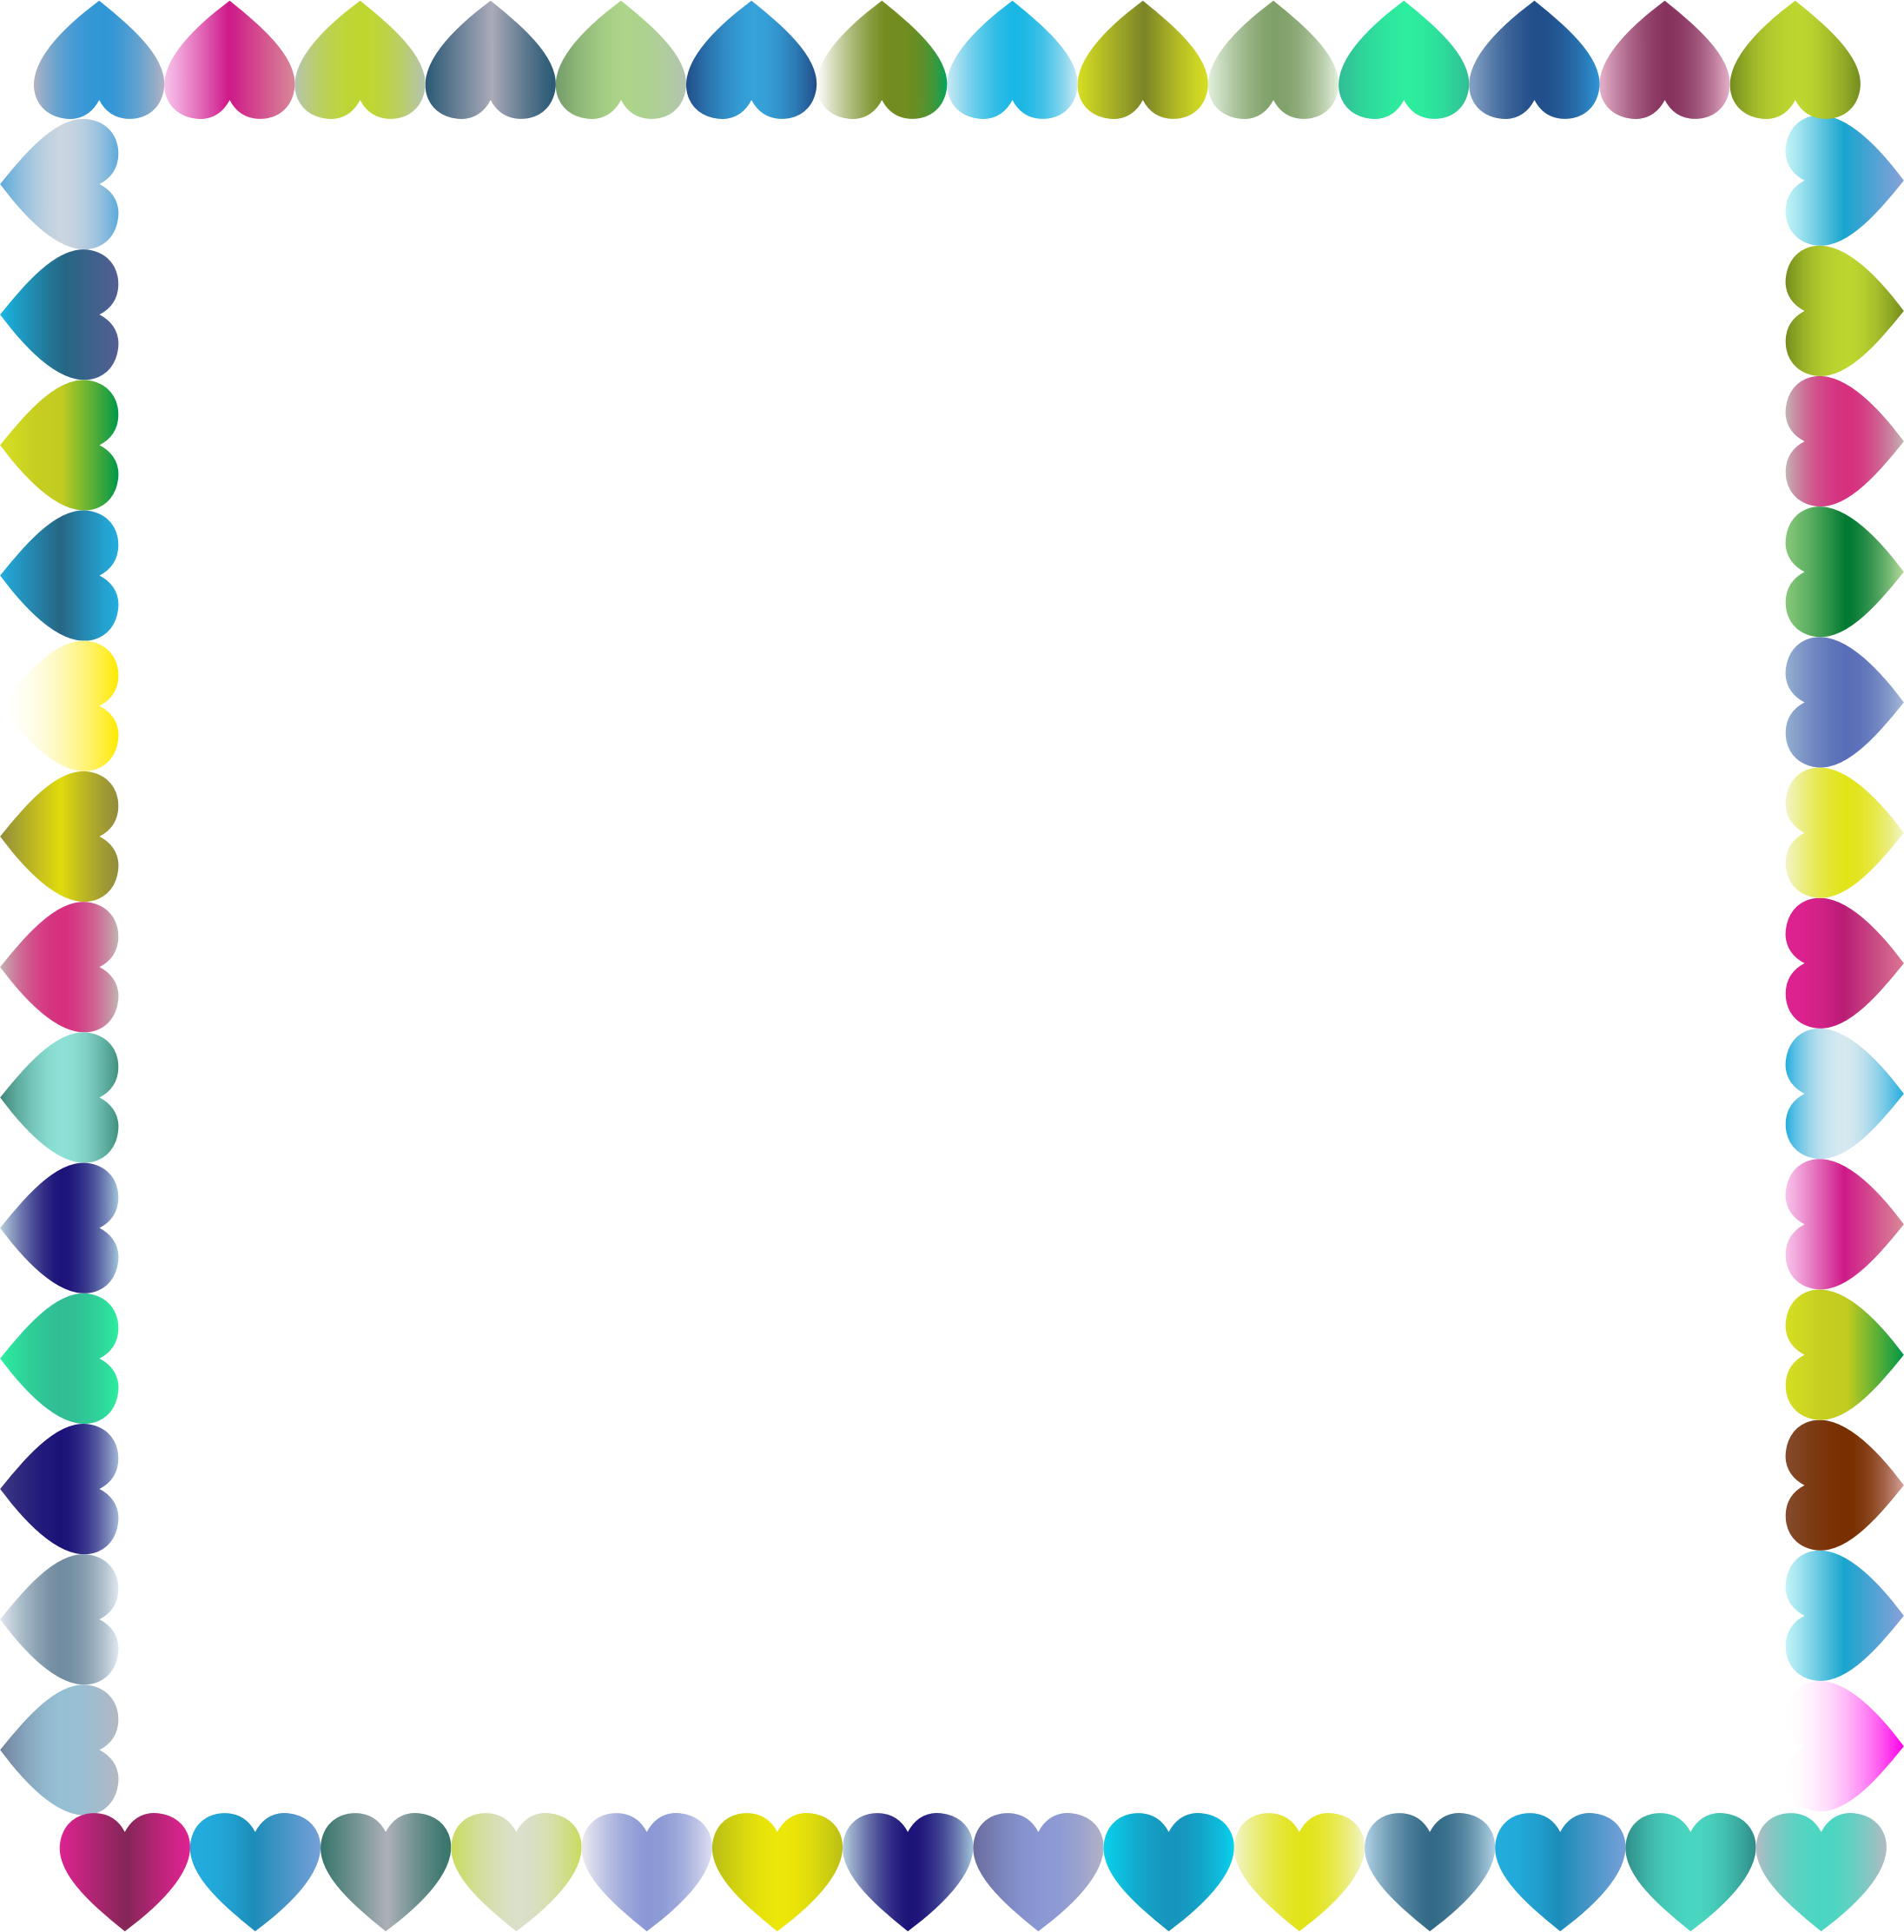 A Square Frame Of Multicolored Hearts